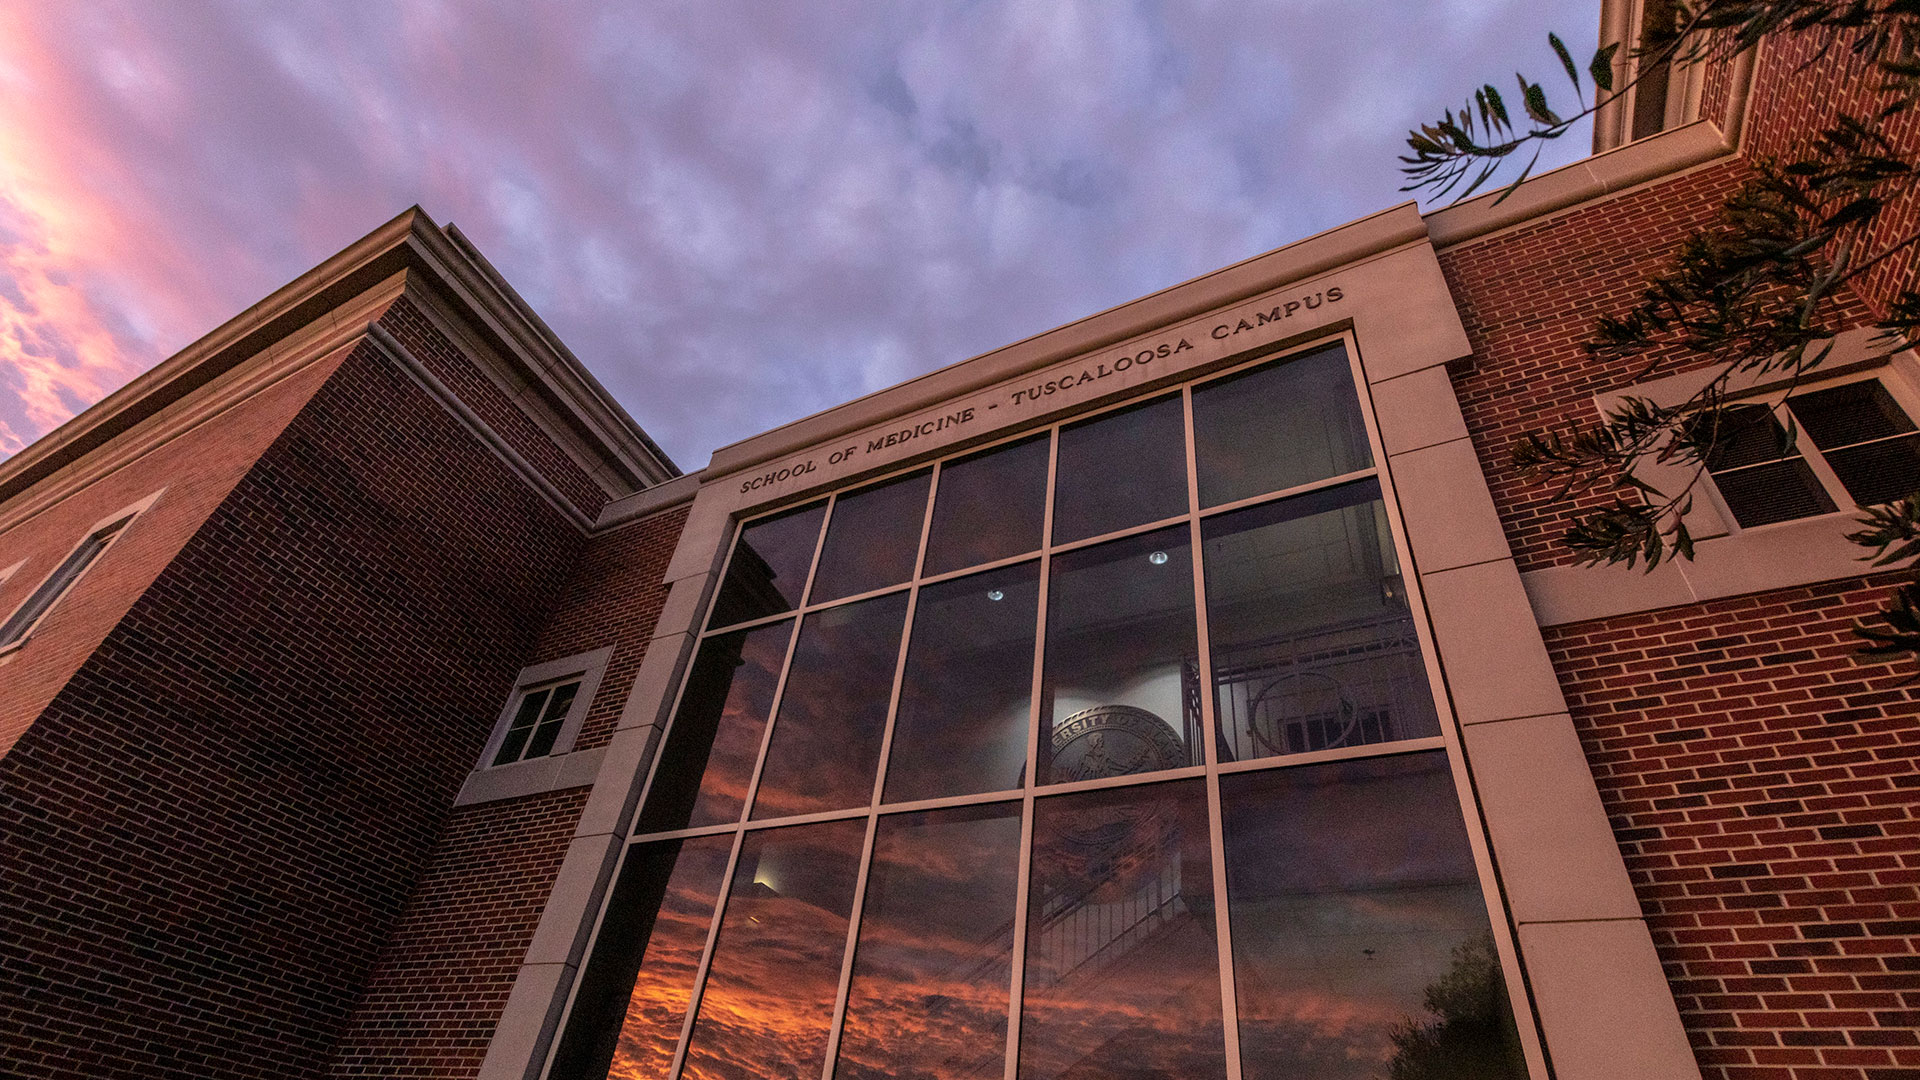 tuscaloosa regional campus building at sunset